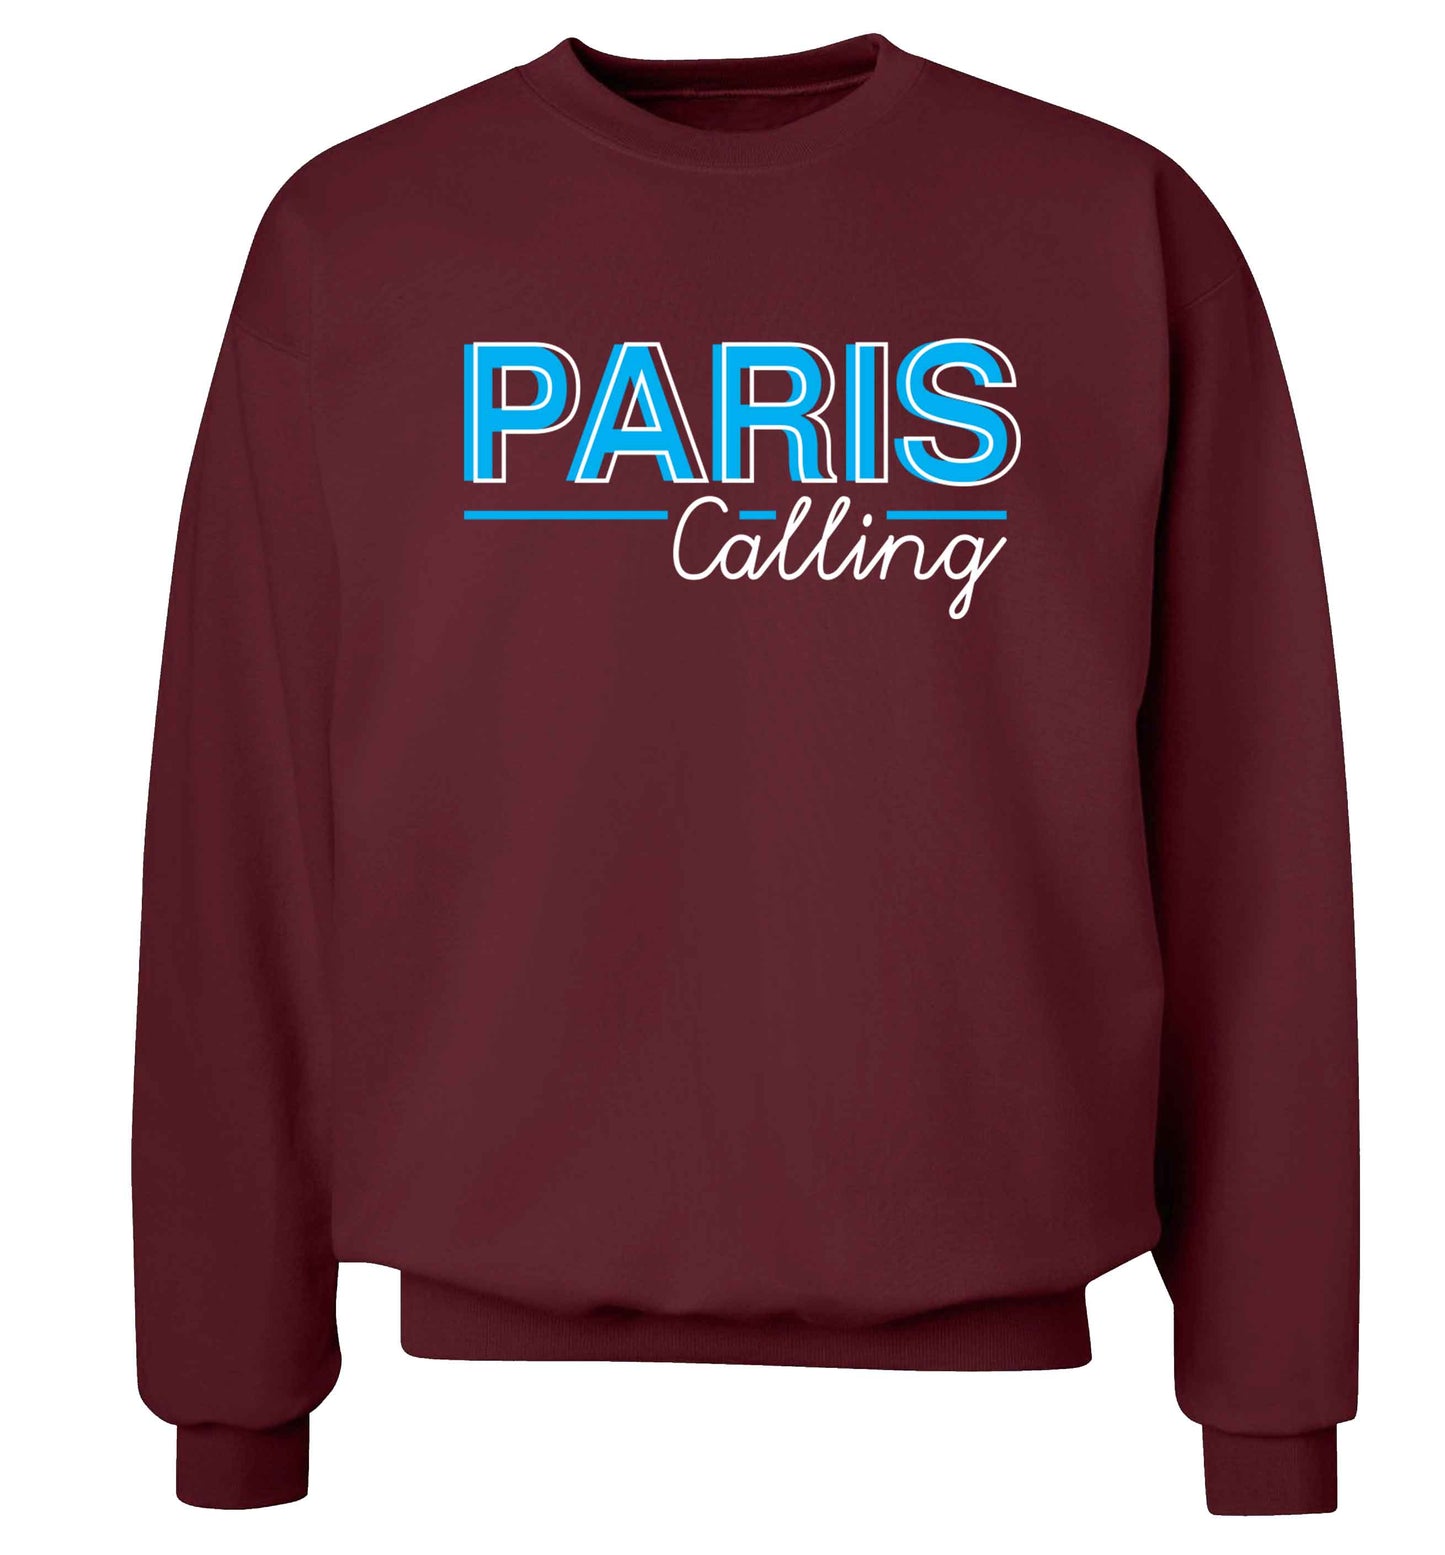 Paris calling Adult's unisex maroon Sweater 2XL